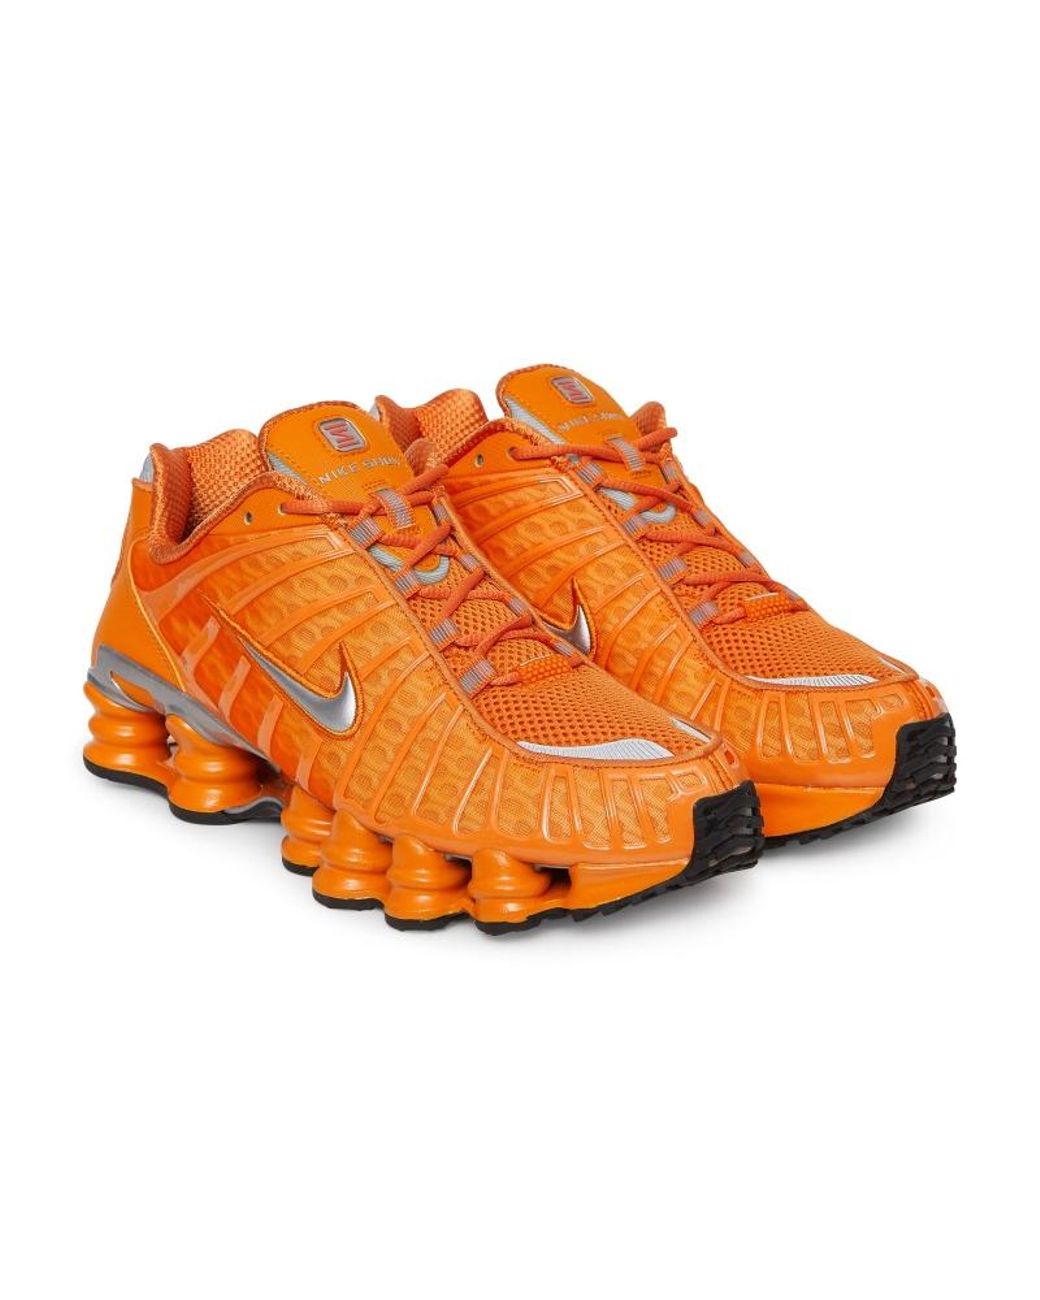 My Rare Trainers - Nike Shox Silver Orange, Nike Shox Silve…